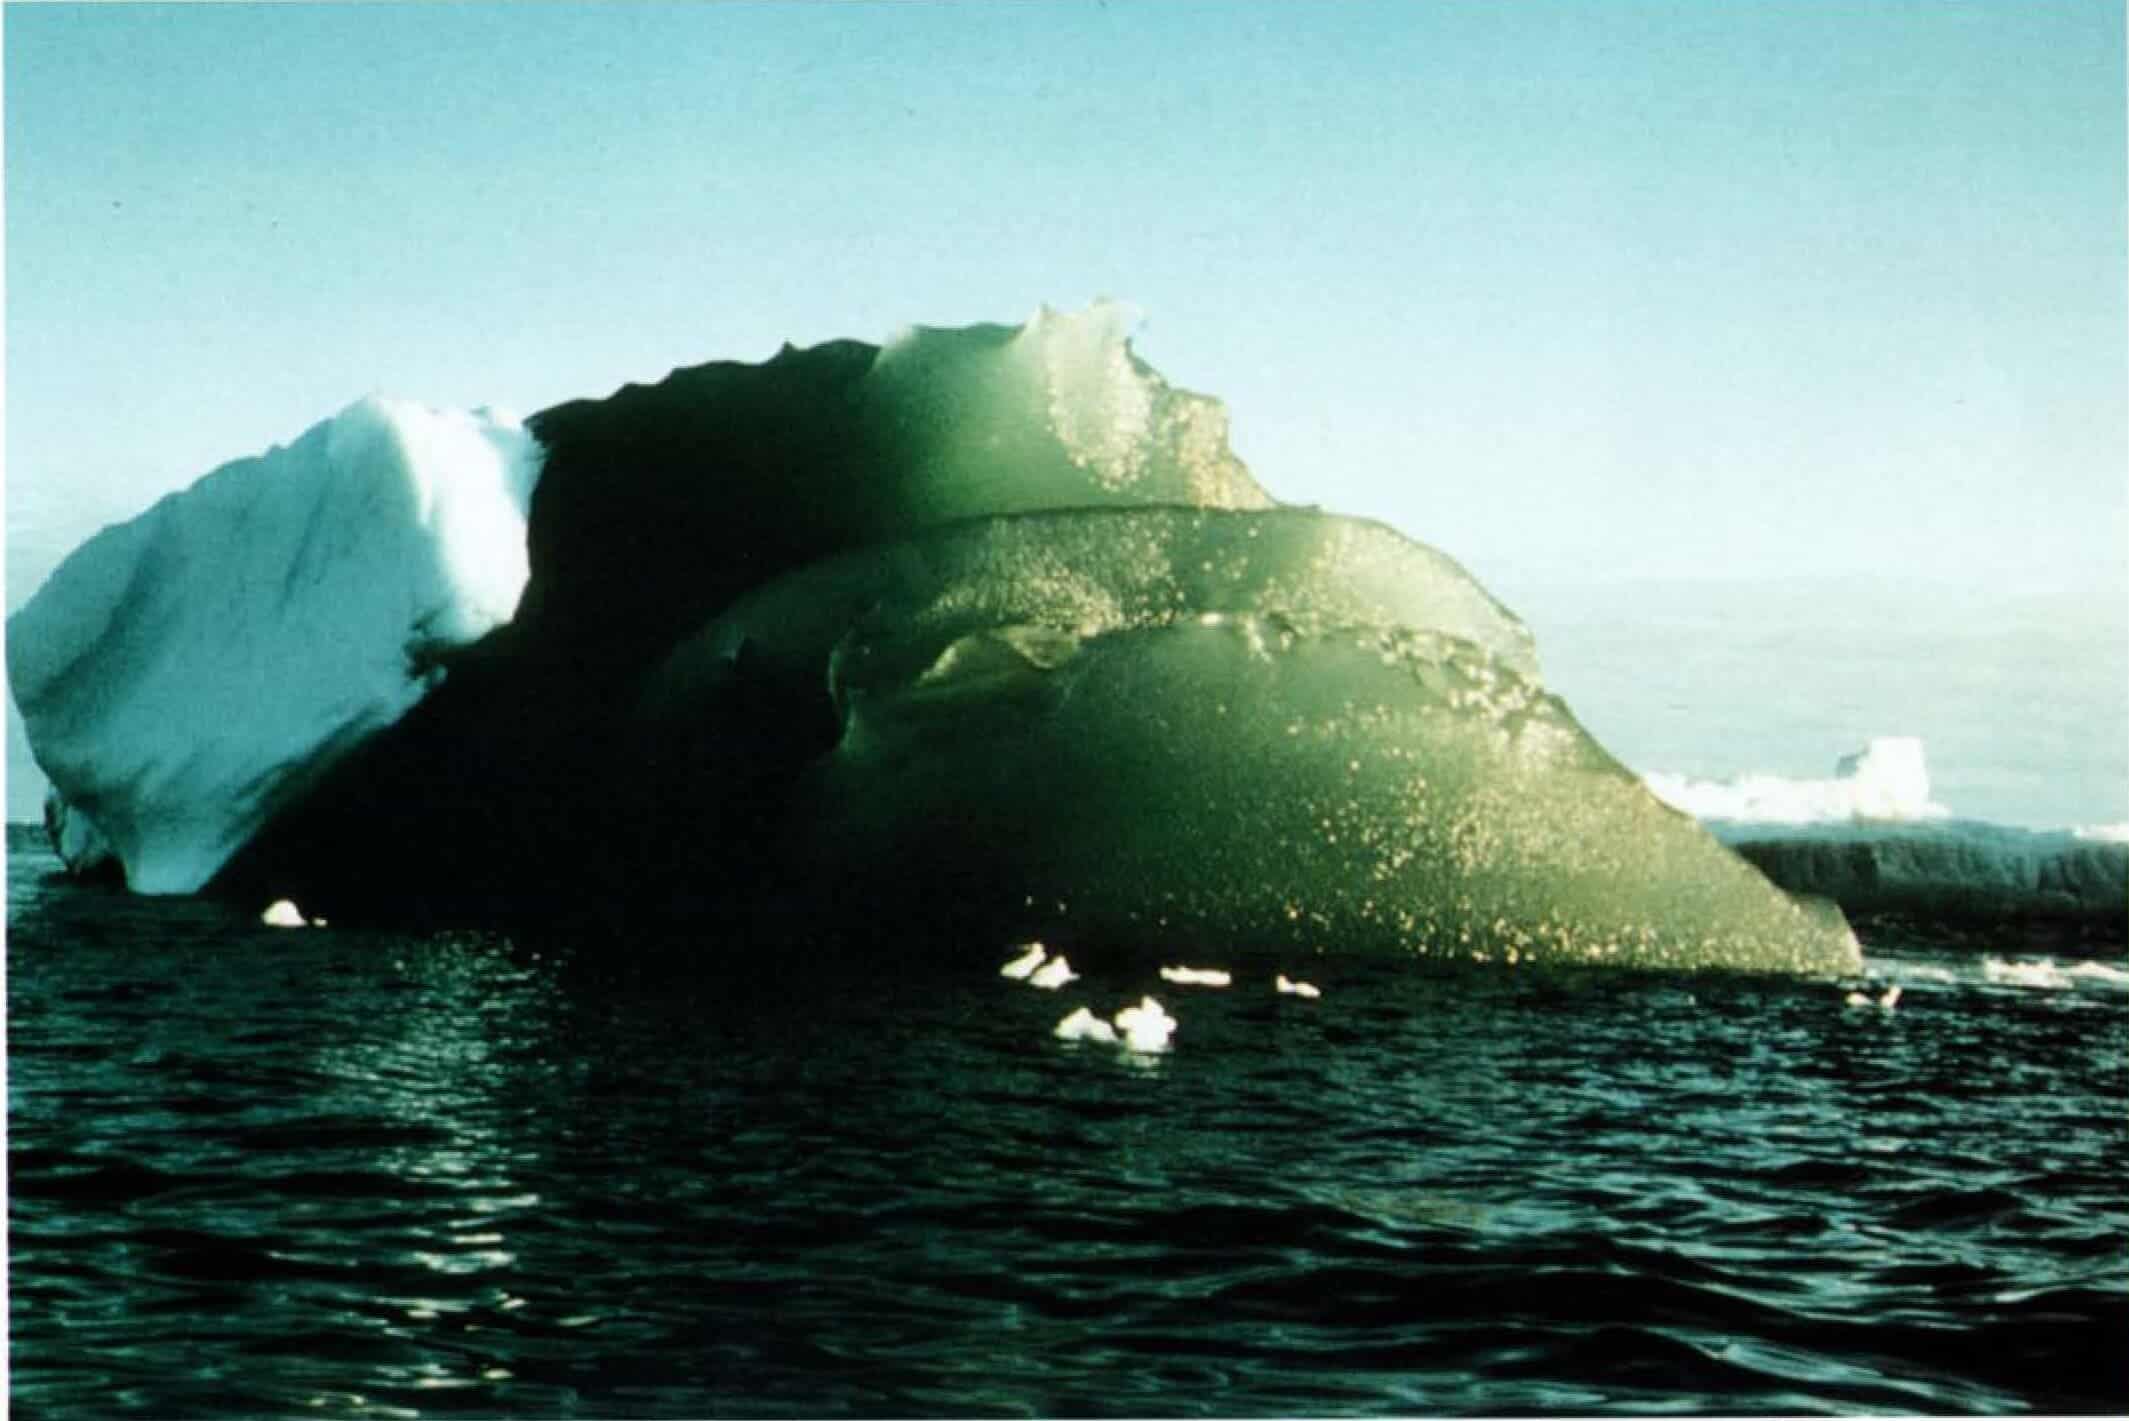 A green iceberg  the Weddell Sea, Antarctica on February 16th, 1985. Credit: AGU.